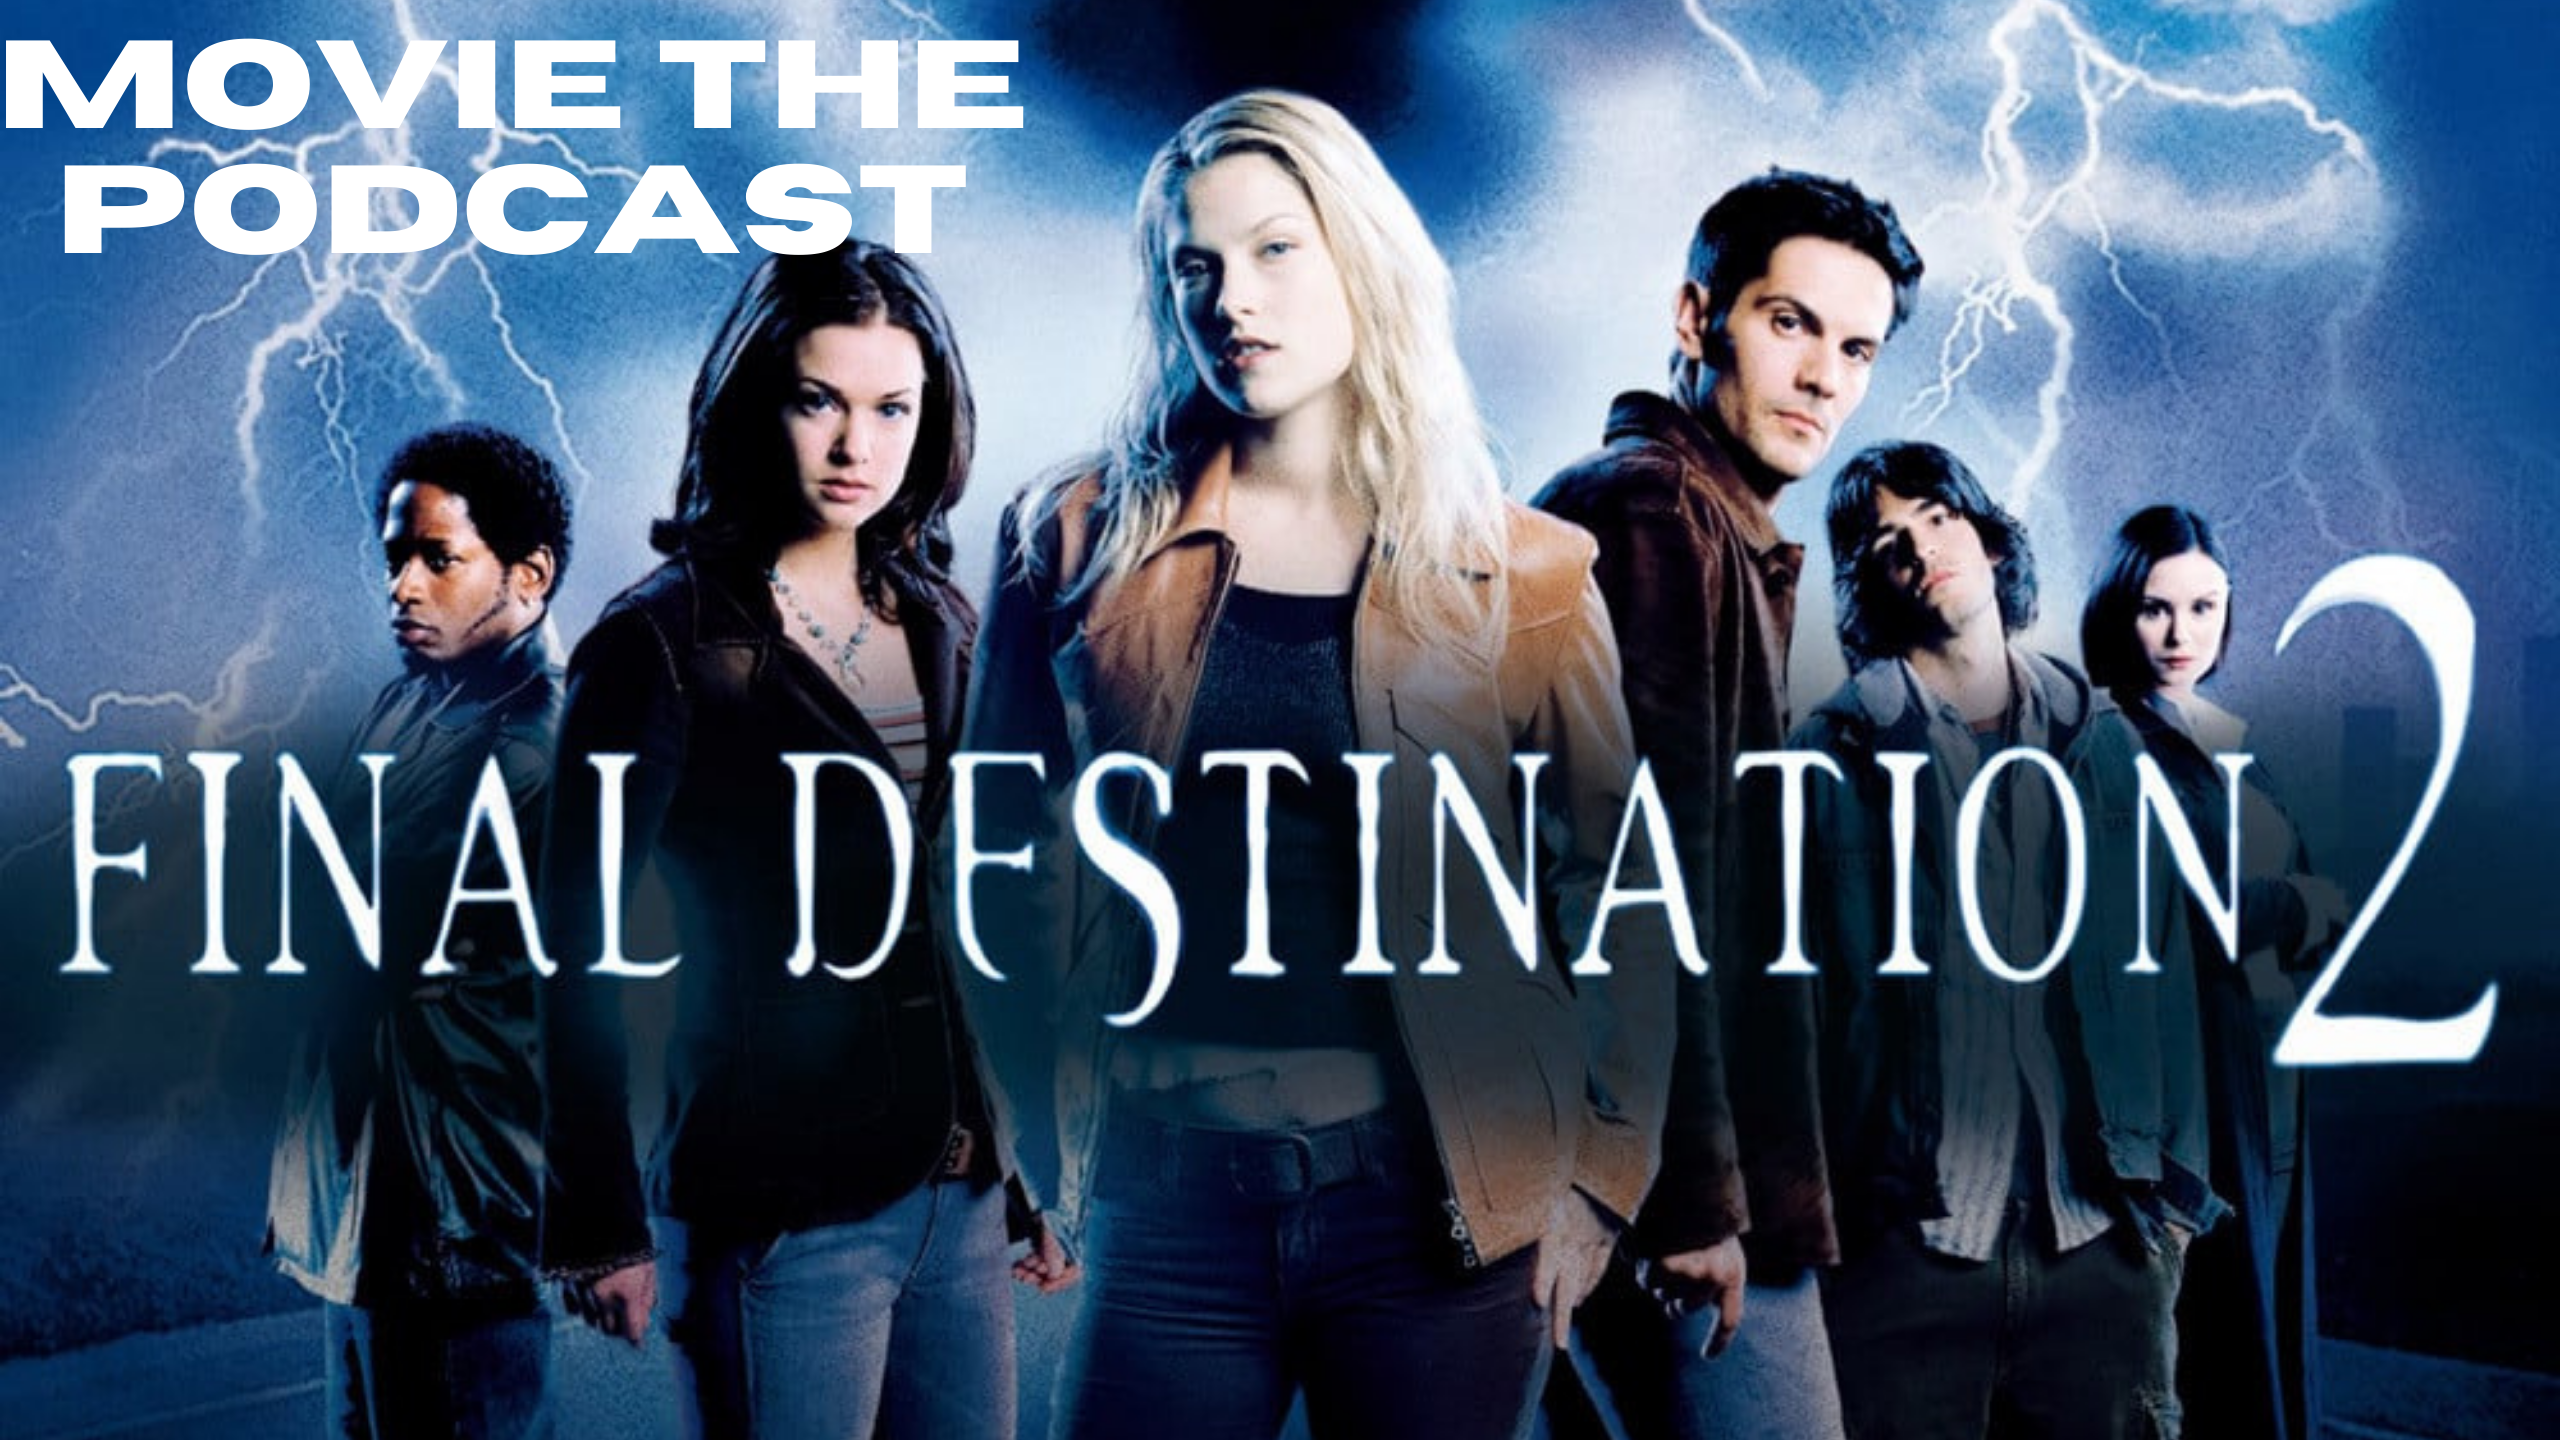 Movie the Podcast : Final Destination 2